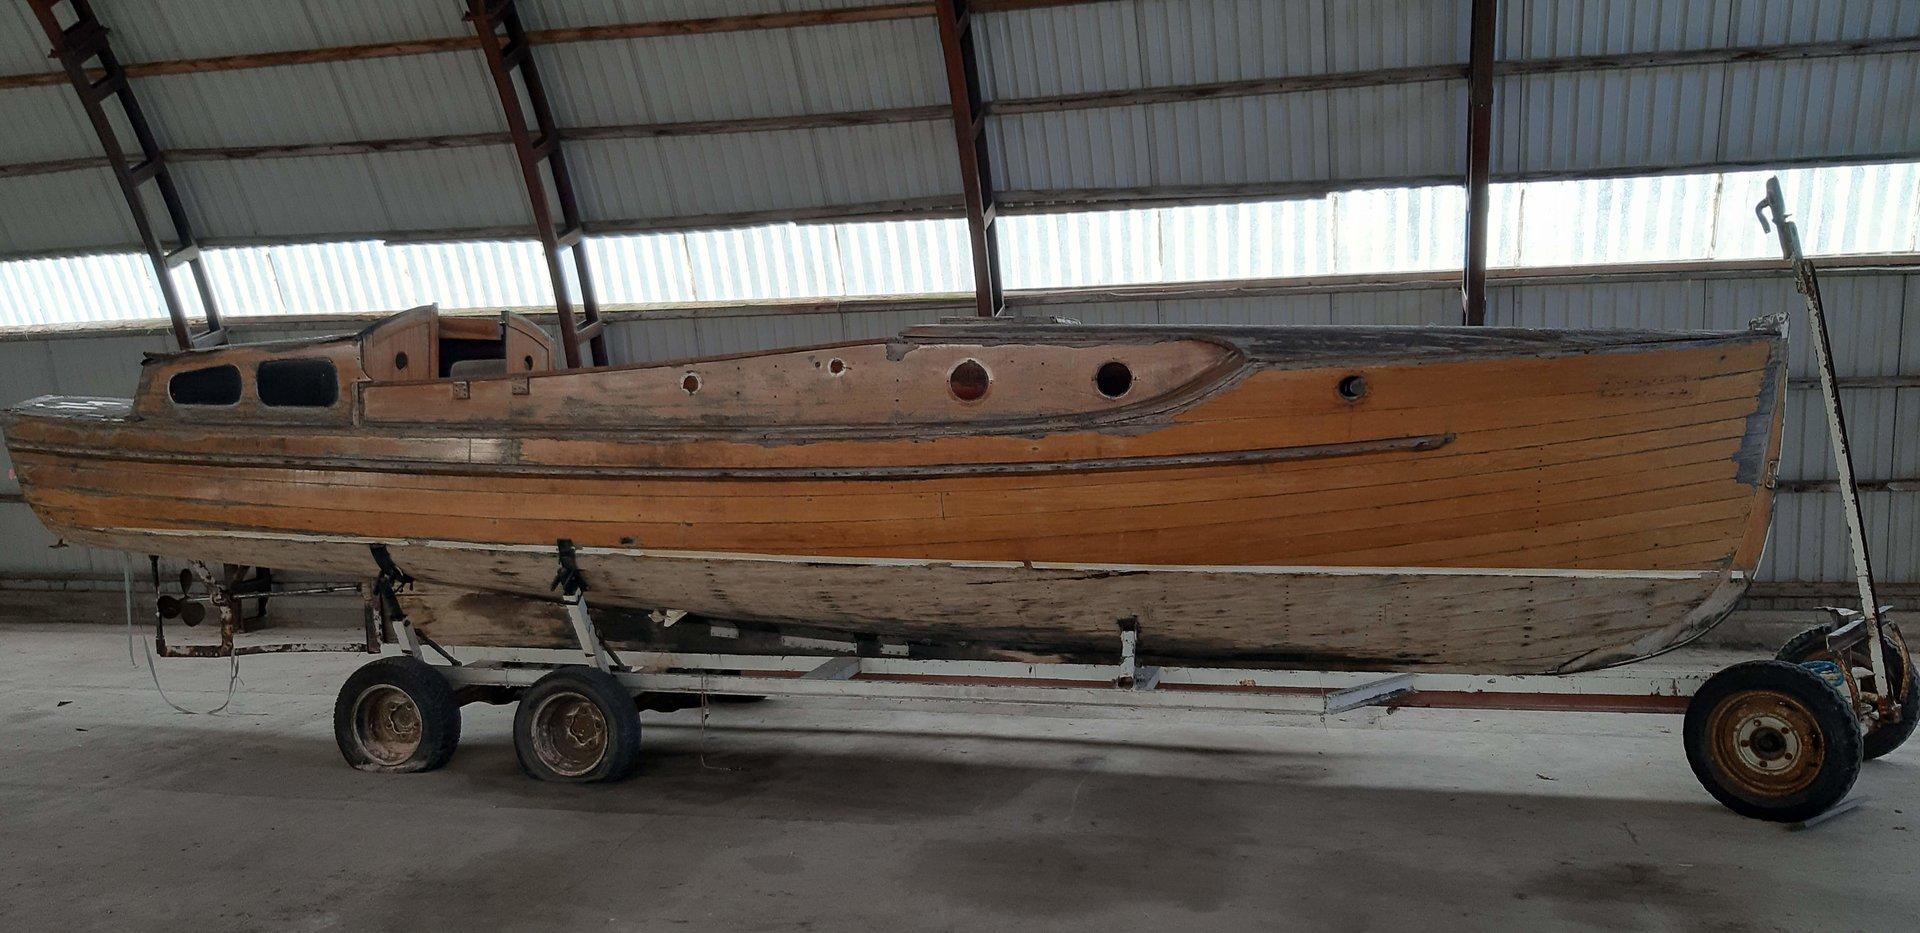 Paat angaaris / Boat in hangar